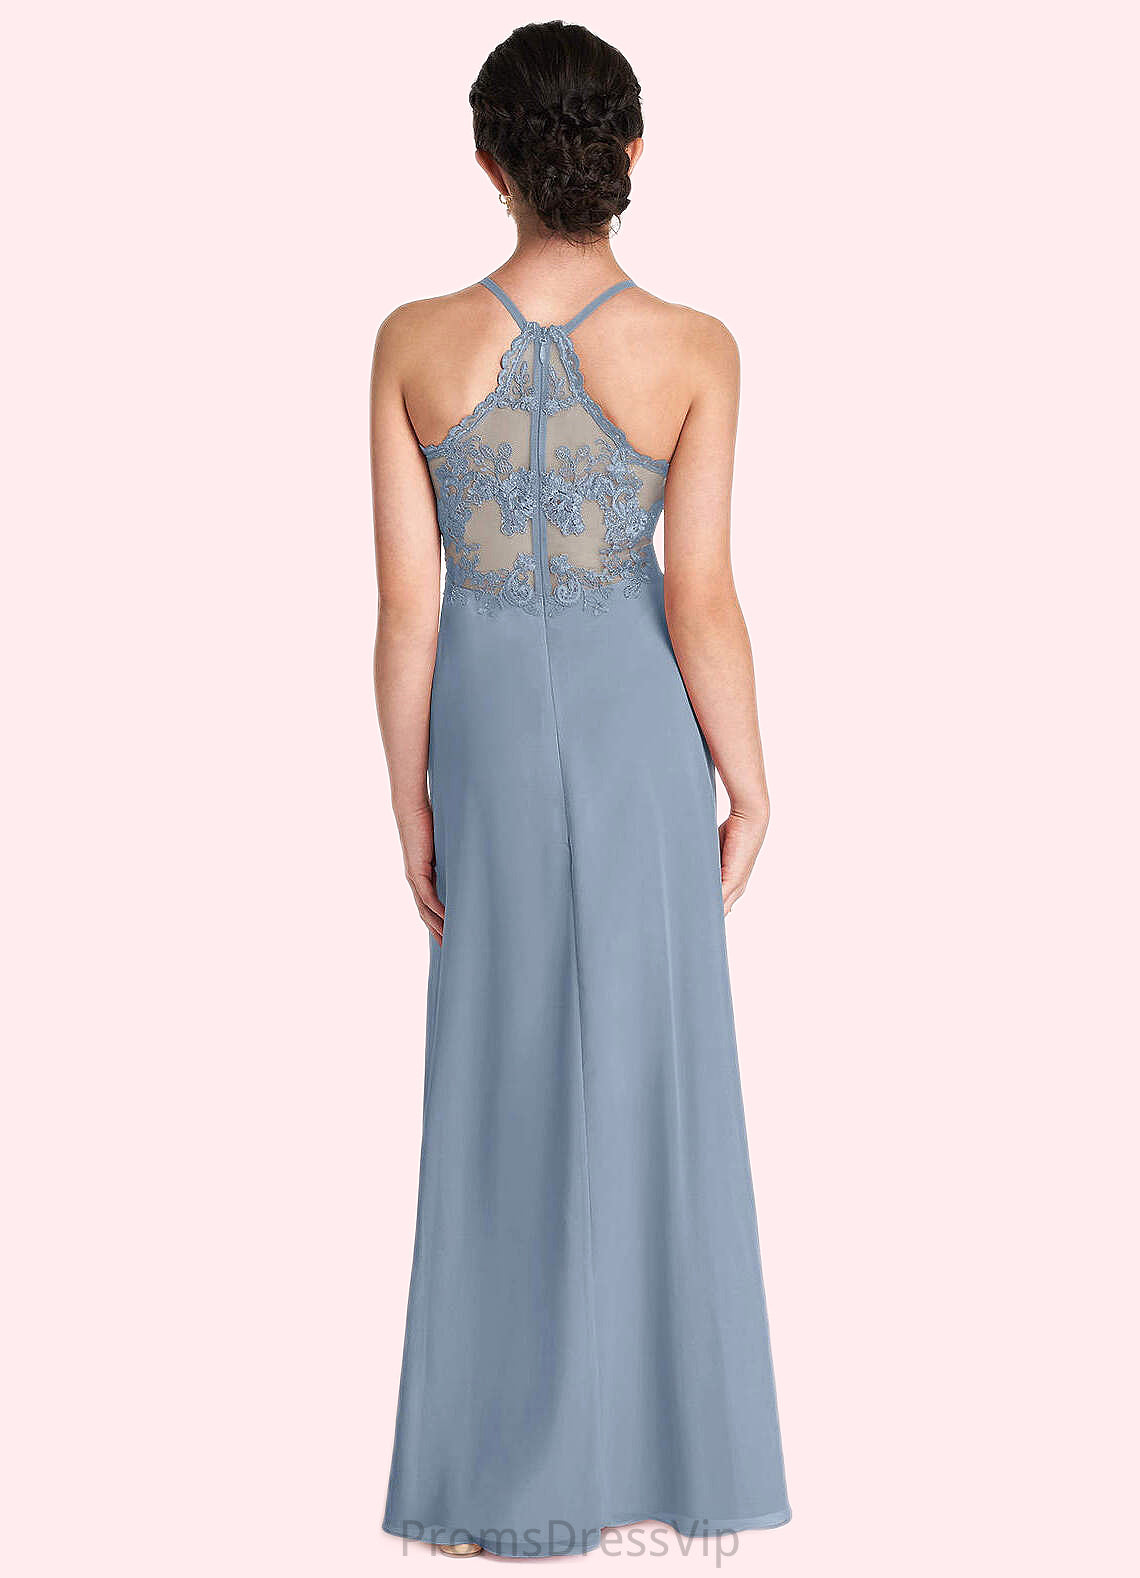 Mireya A-Line Lace Chiffon Floor-Length Junior Bridesmaid Dress dusty blue HLP0022860